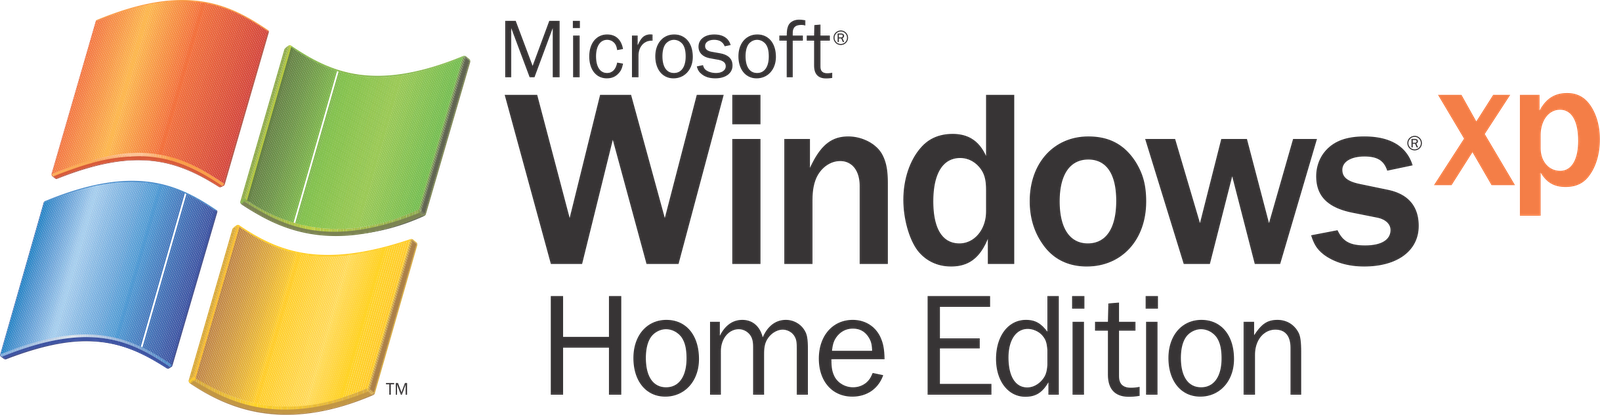 Windows Home Crack Edition Xp